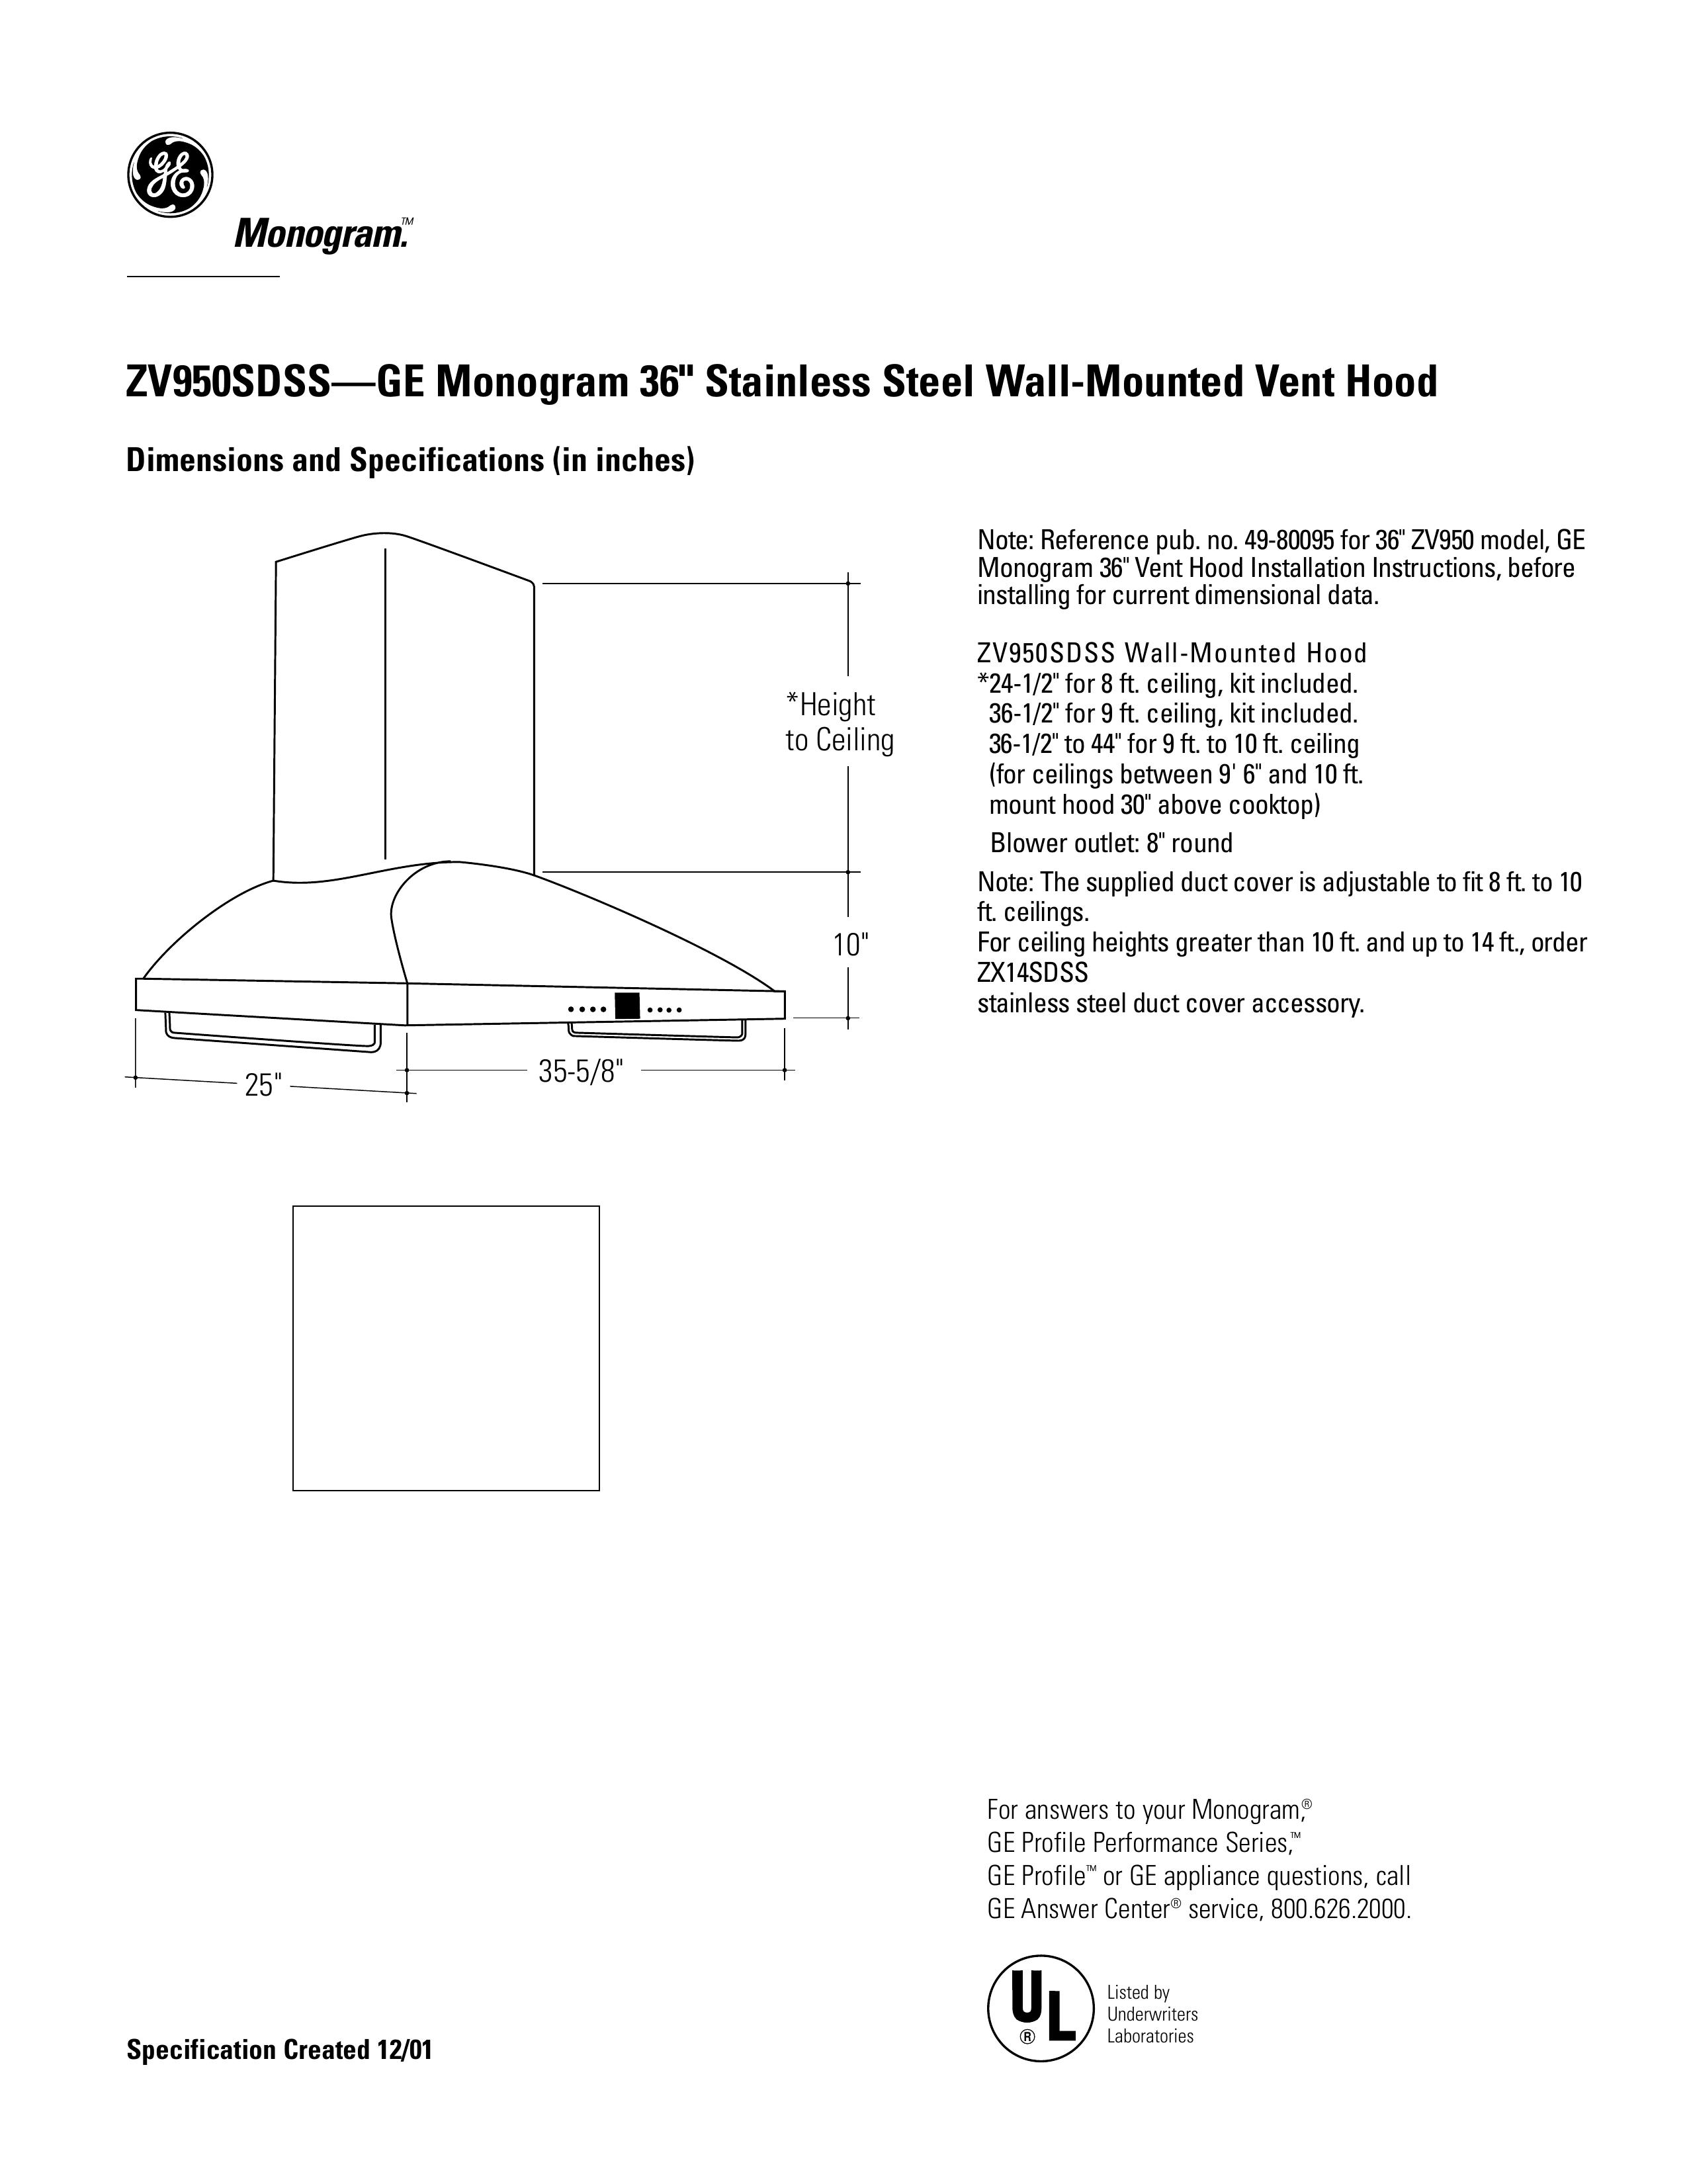 GE Monogram ZV950SDSS Ventilation Hood User Manual